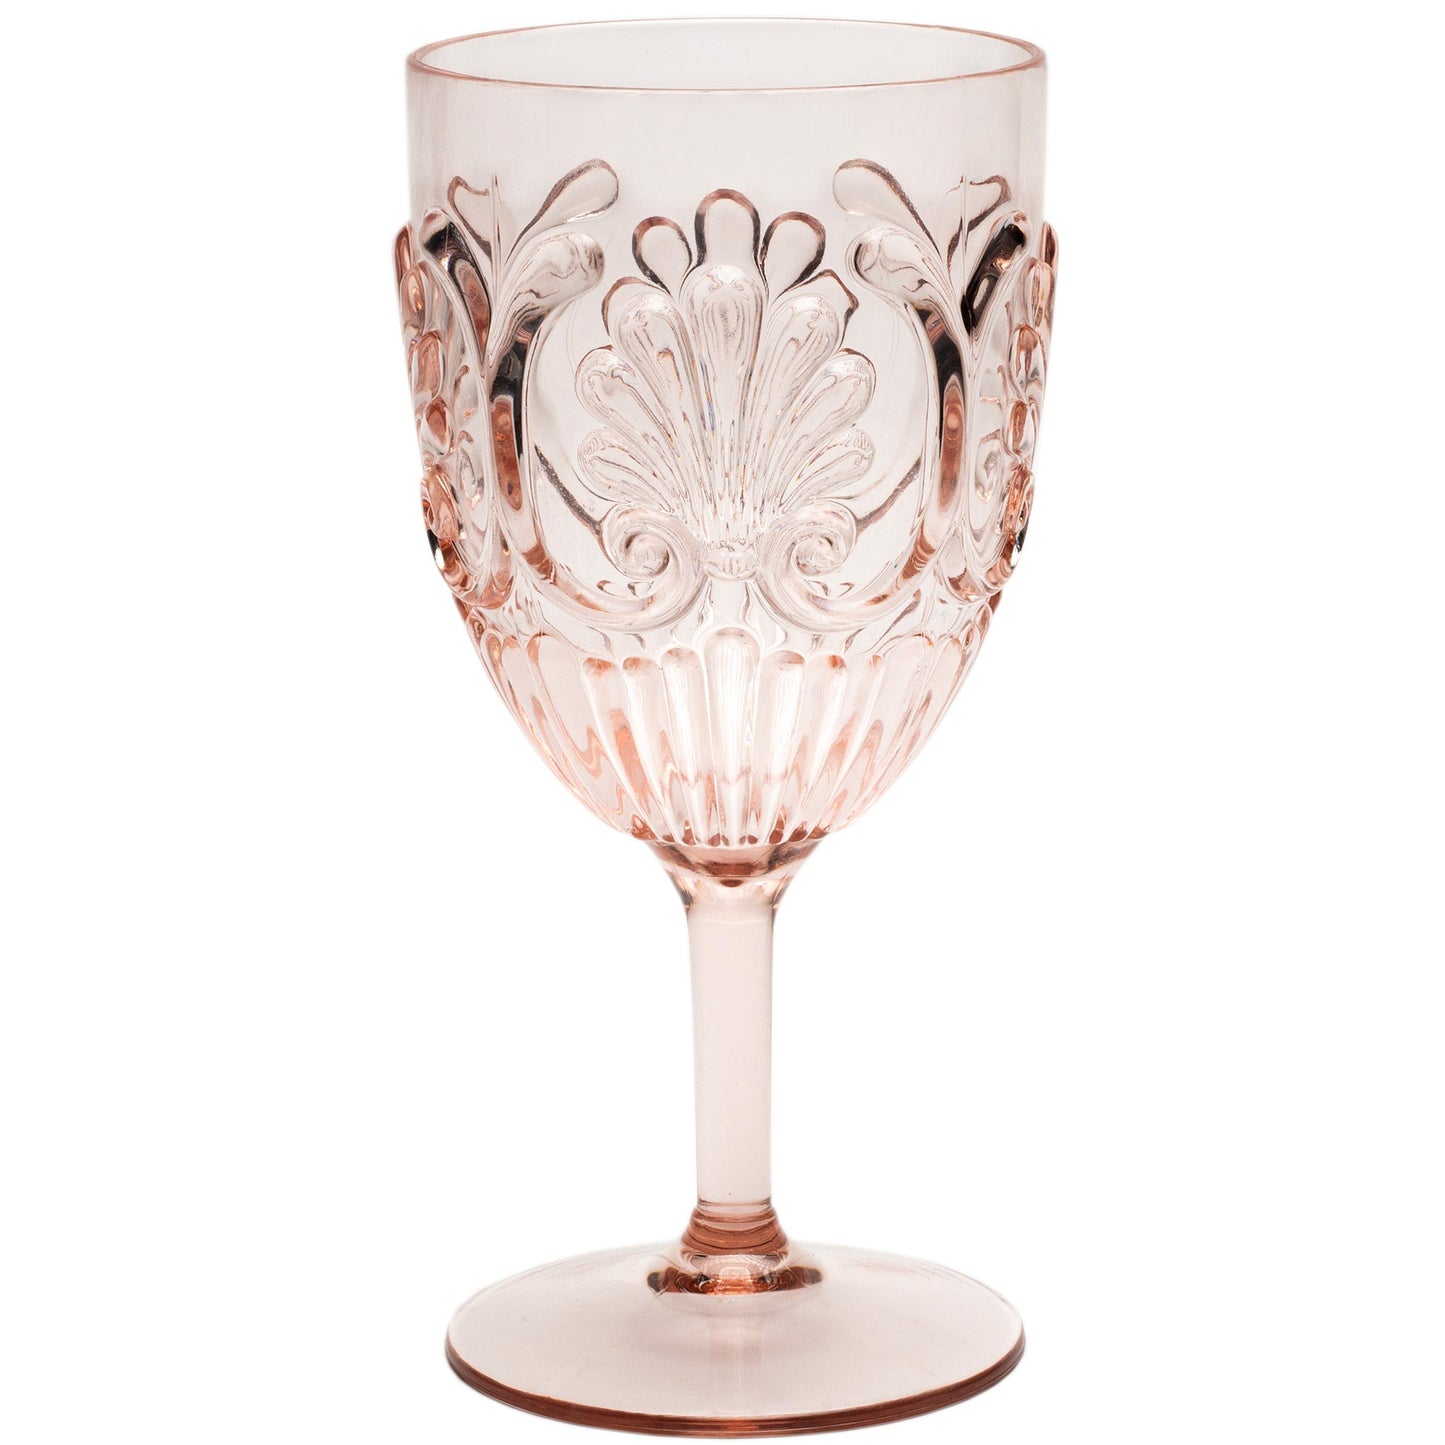 Acrylic Wine Glasses (Set of 4) - Pale Pink by Komorebi